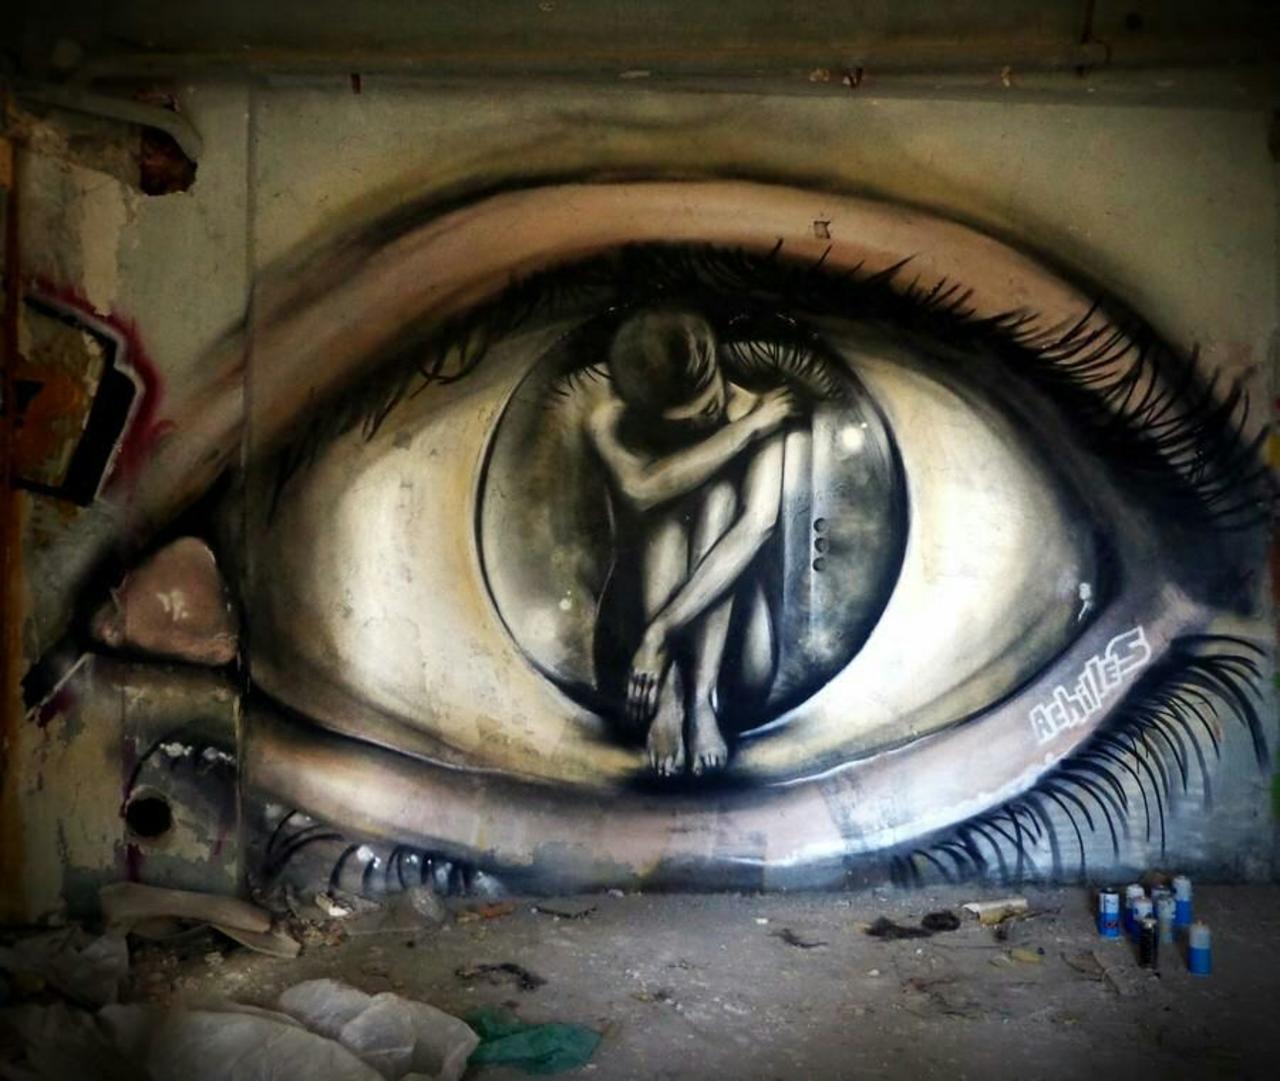 RT @QueGraffiti: Dentro del ojo.
Artista: Achilles
Atenas, Grecia.
#art #streetart #mural #graffiti http://t.co/kFpp1QmmZj